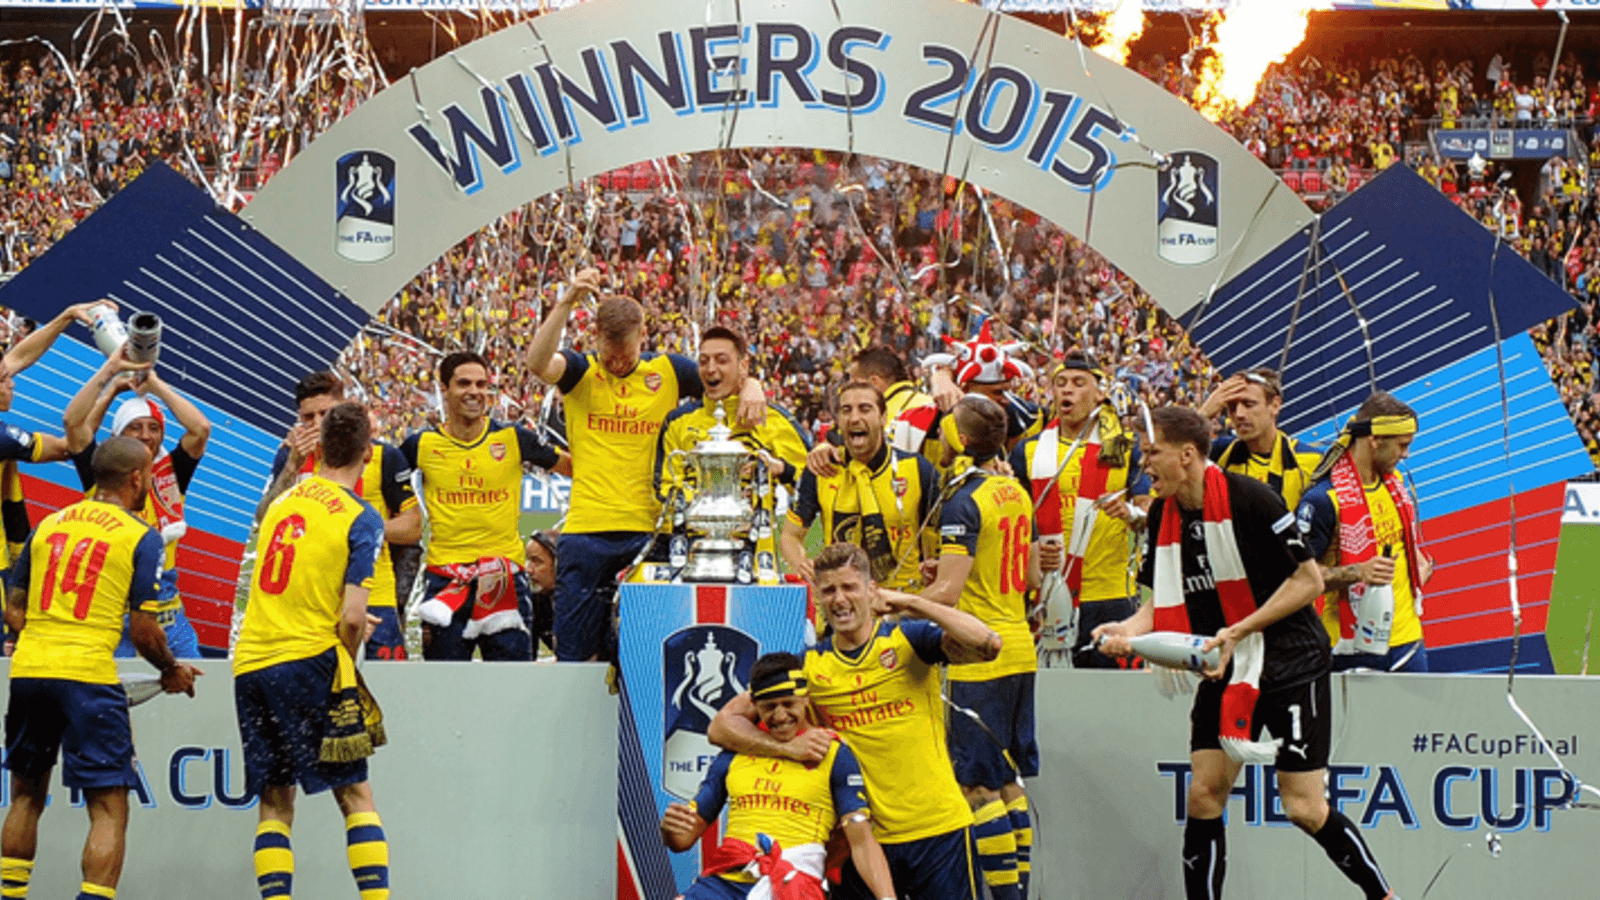 FA Cup winners parade - Live updates | News | Arsenal.com